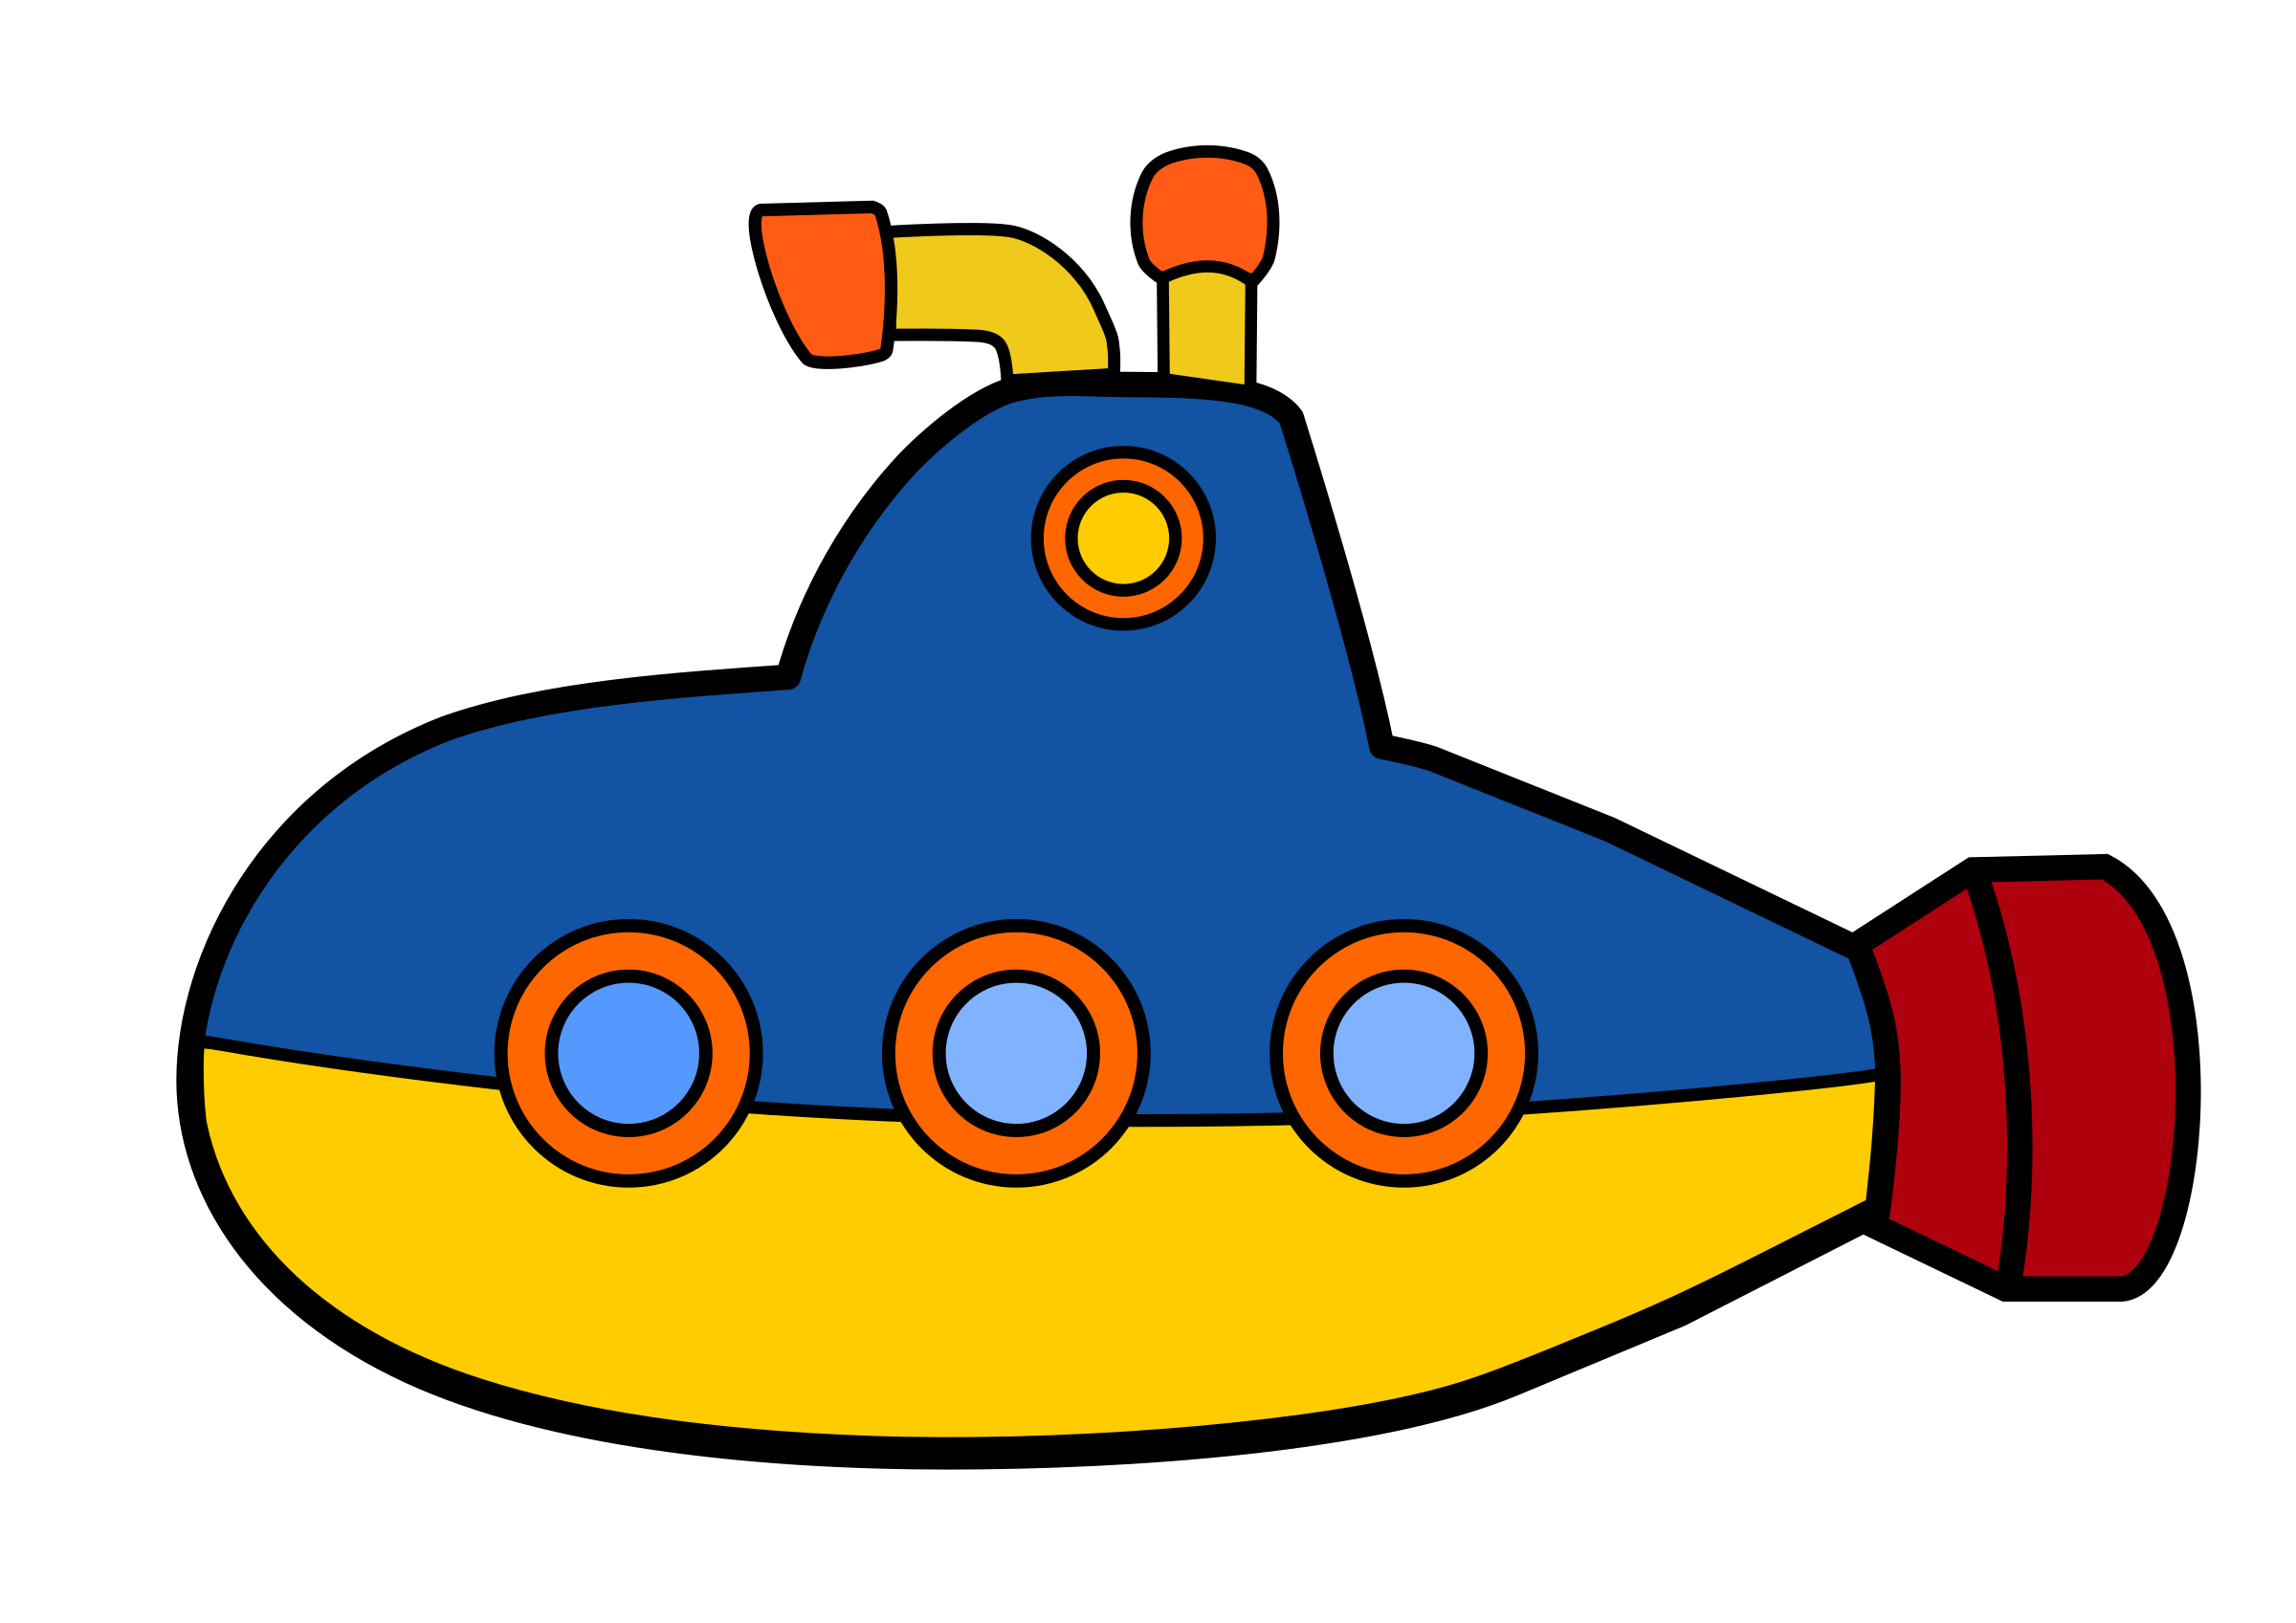 Toy sub by ejmillan. Submarine clipart ocean